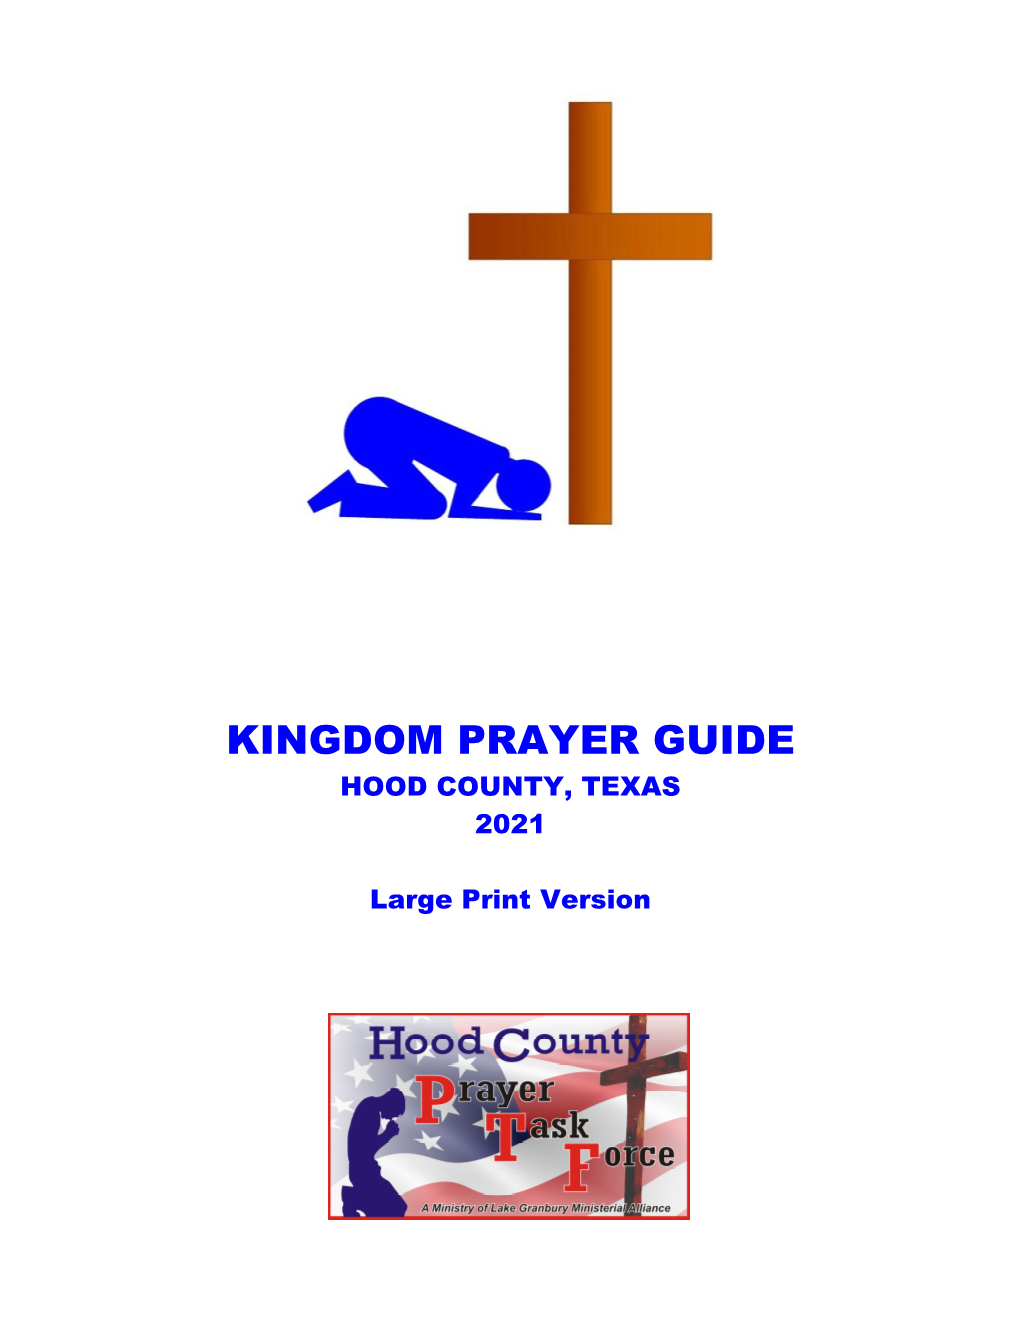 Kingdom Prayer Guide Hood County, Texas 2021